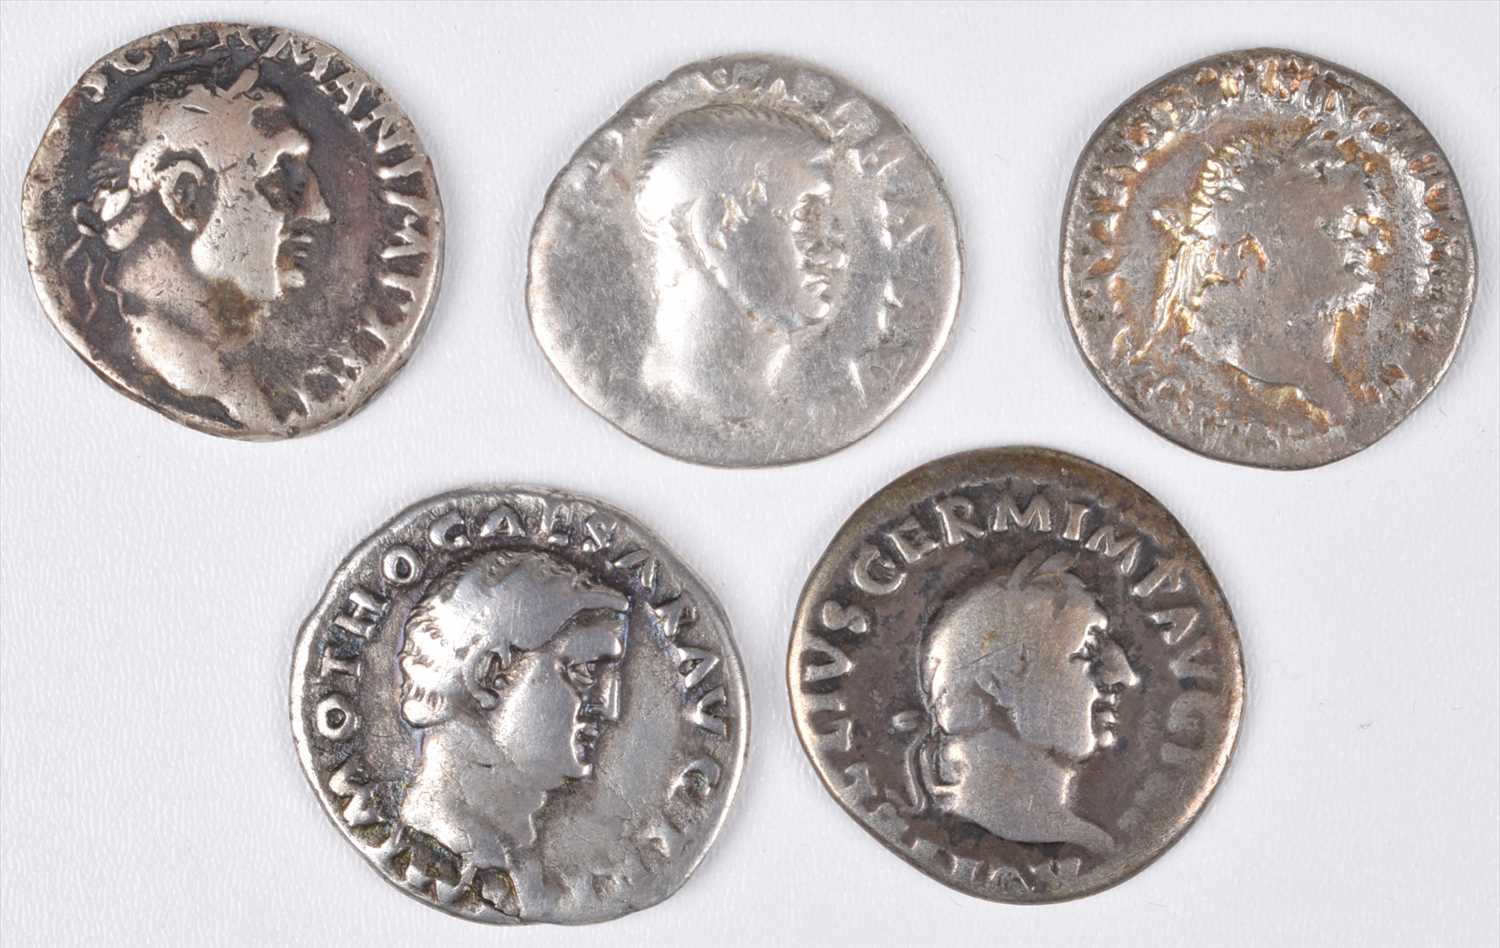 Lot 184 - Five Roman denarii to include Vitellius, Galba, Otho and Titus (5).